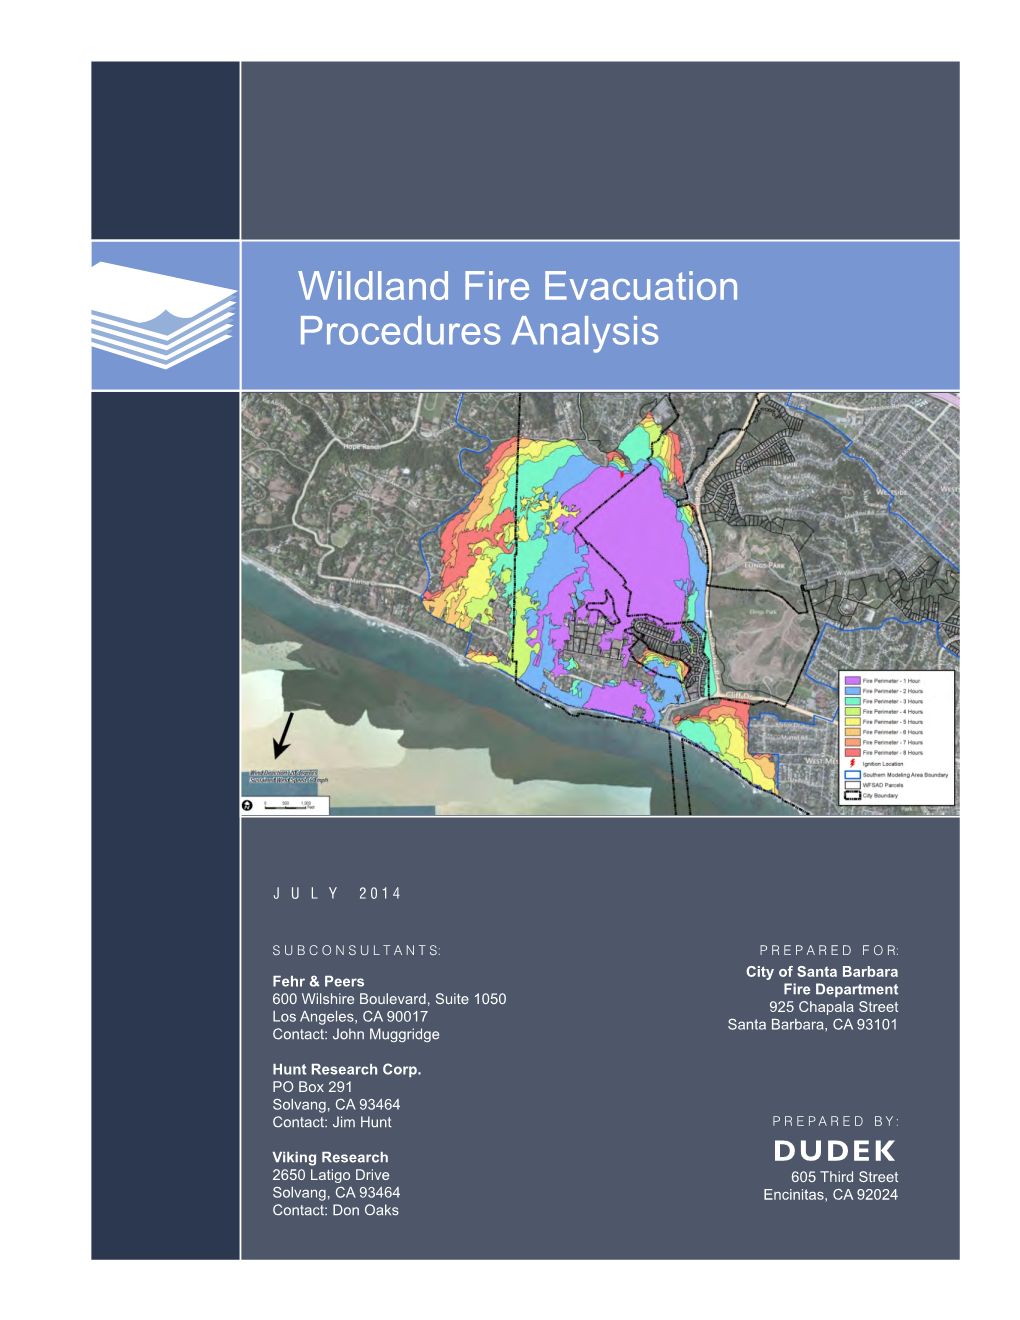 Wildland Fire Evacuation Procedures Analysis